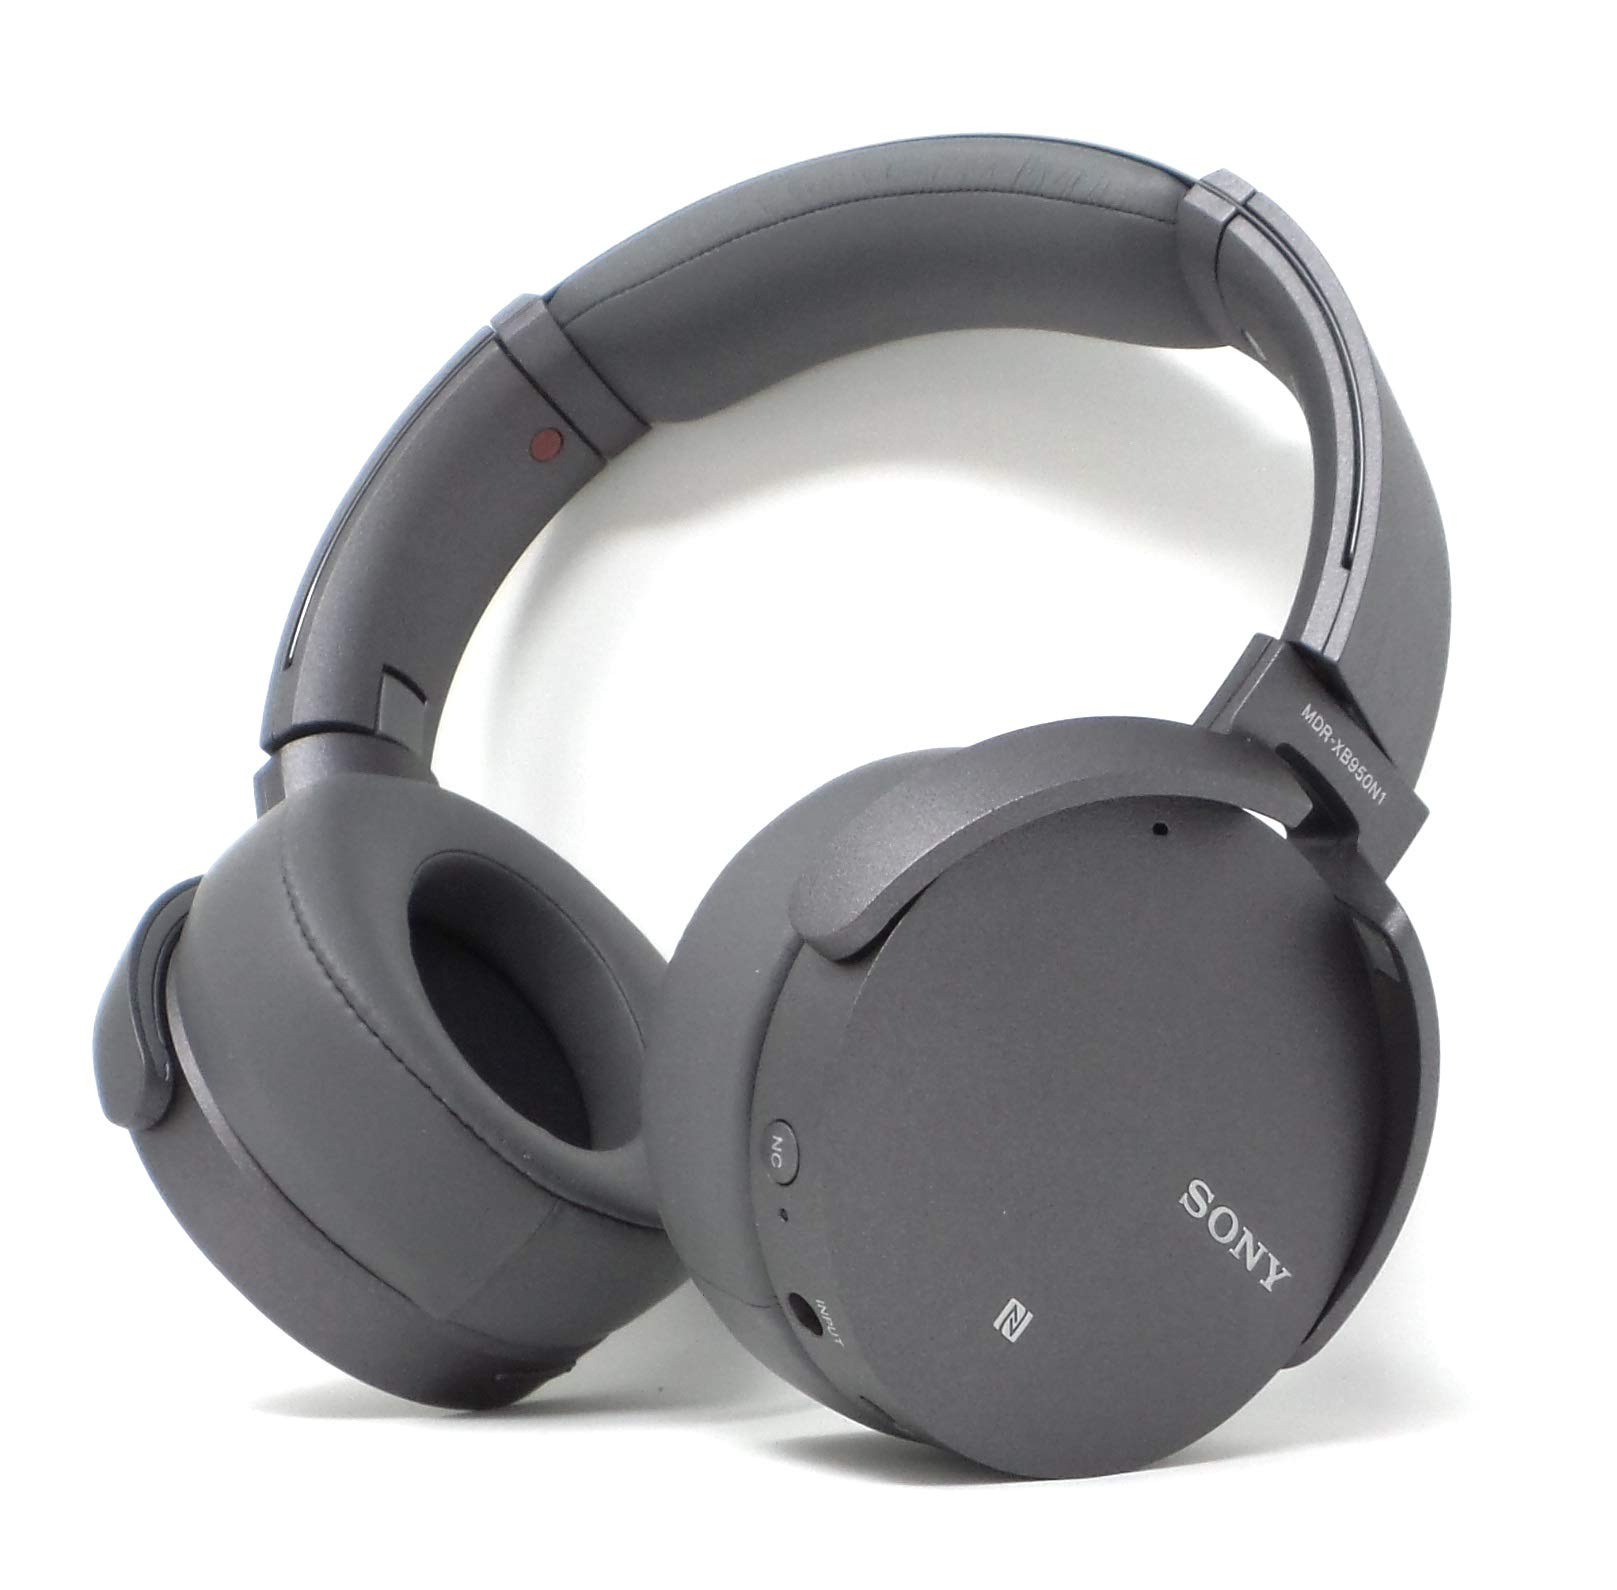 Sony XB950N1 Extra Bass Wireless Noise Cancelling Over-the-Ear Headphones - Titanium